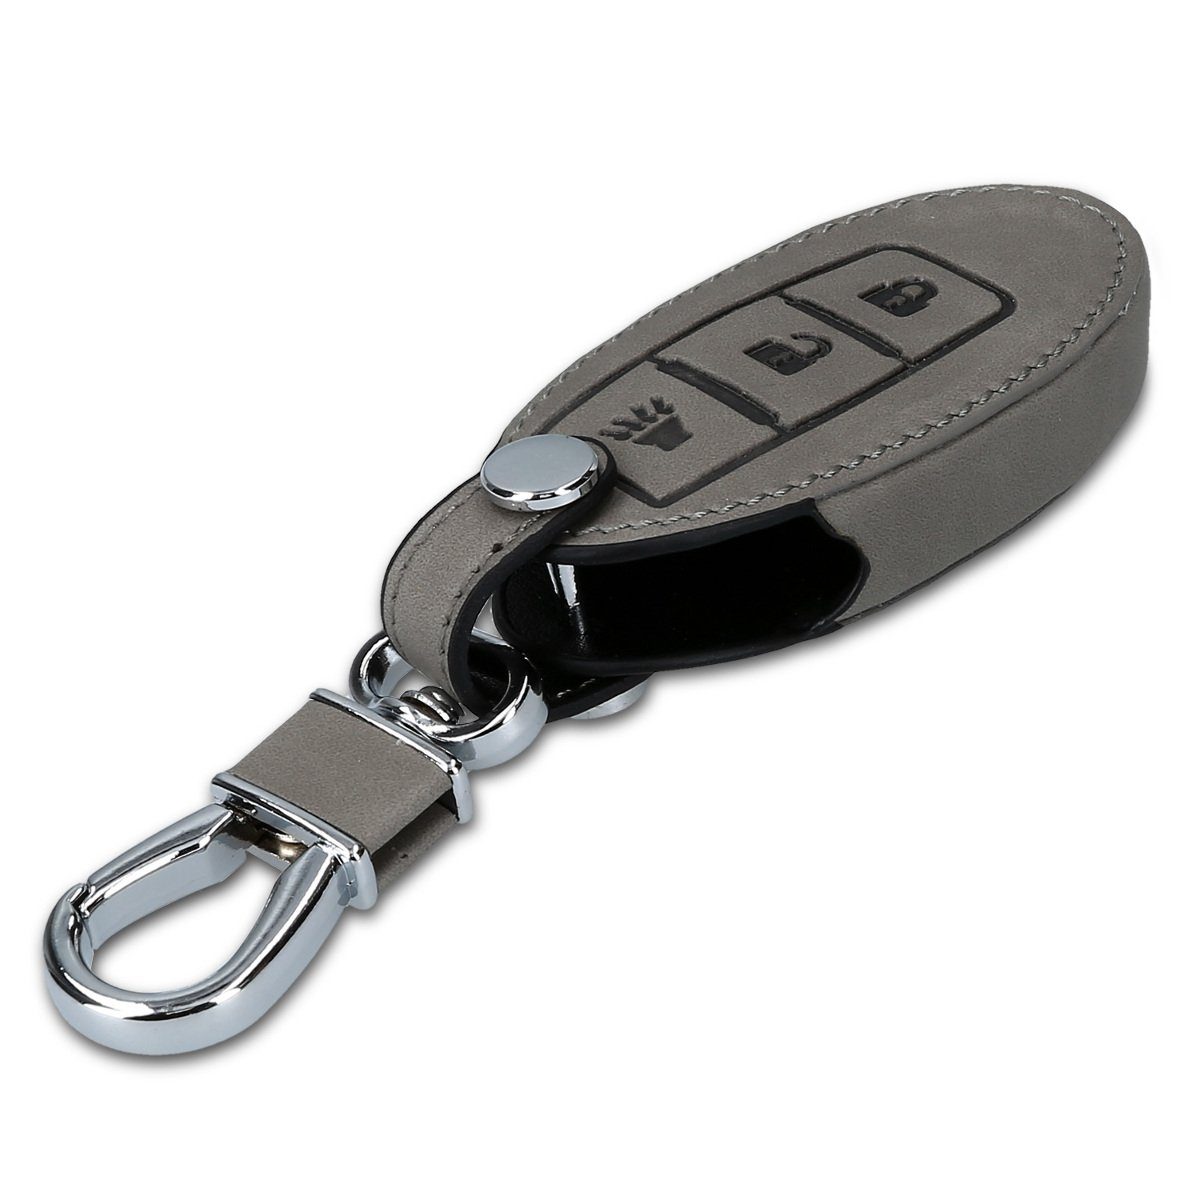 Autoschlüssel Nubuklederoptik für Nissan, Kunstleder - Hülle Schlüsselhülle Schutzhülle Schlüsseltasche kwmobile Cover